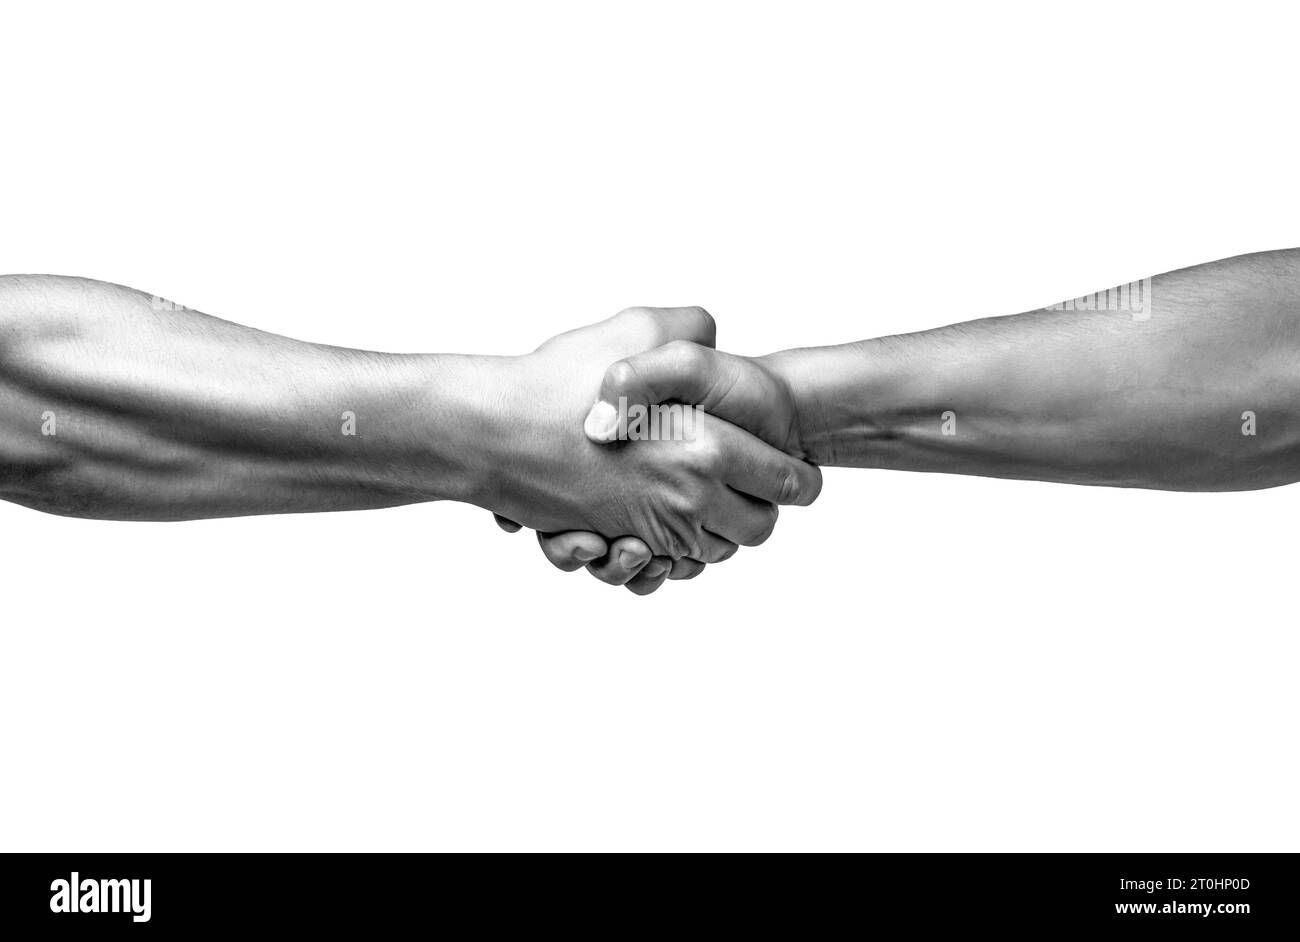 Friendly handshake, friends greeting, teamwork, friendship. Rescue, helping gesture or hands. Two hands, helping arm of a friend, teamwork. Helping Stock Photo